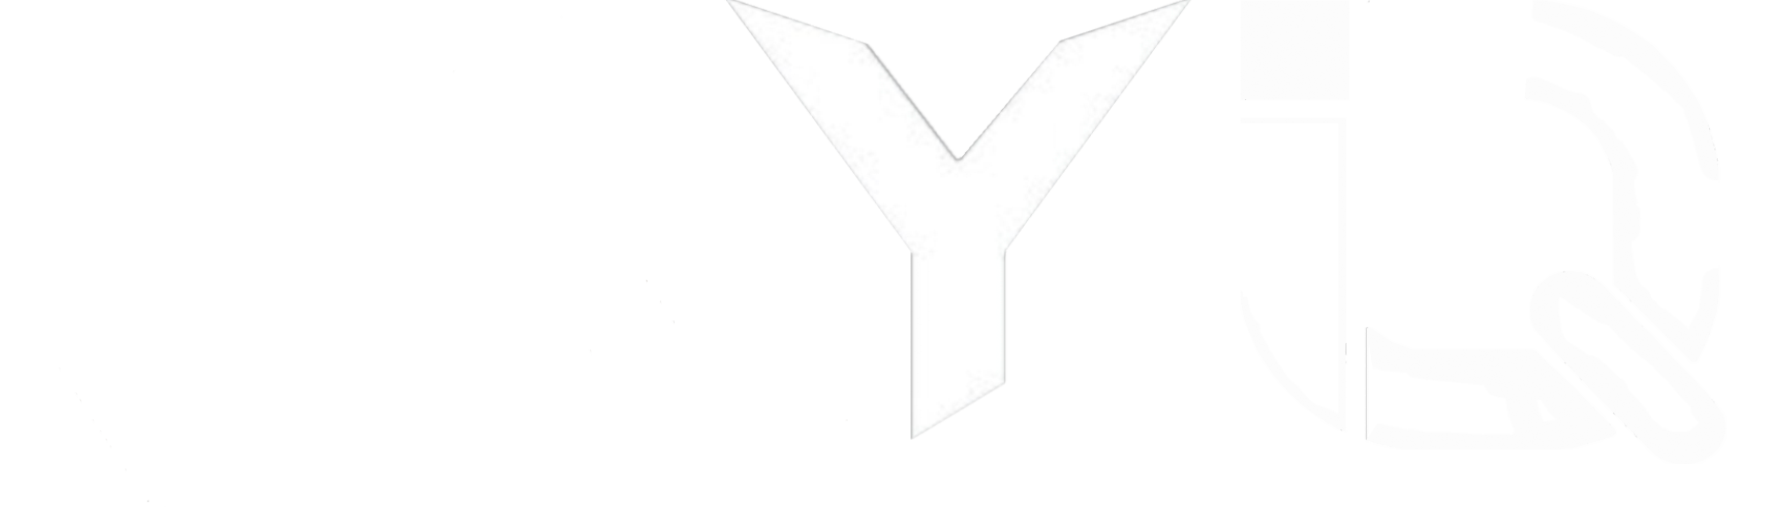 FAYIQ - Web Design, App Development, Branding, SEO